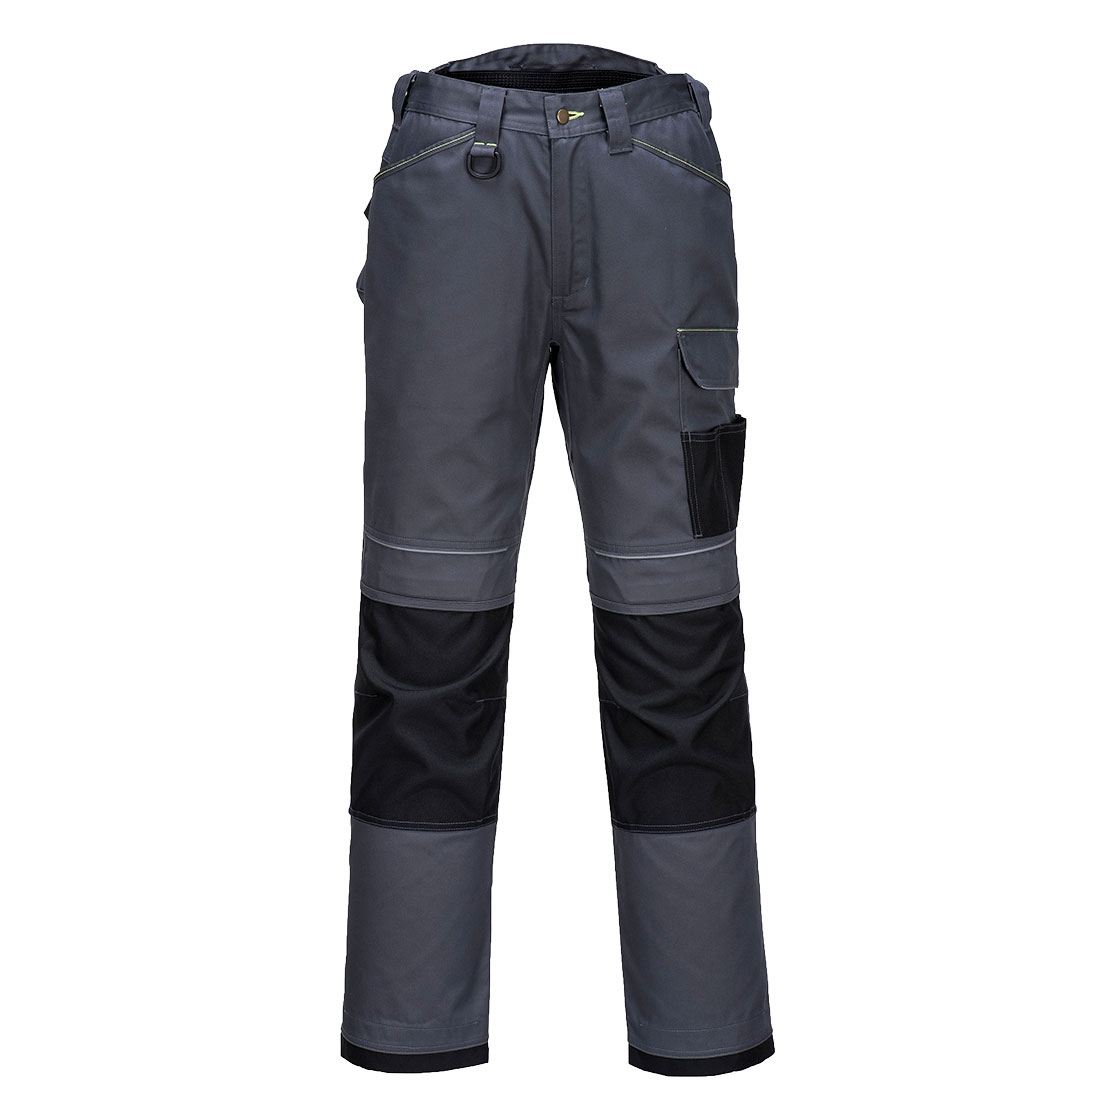 Portwest Hi Vis Two Tone Hi Vis Work Safety Trousers Knee Pad Pockets PW3 T501 